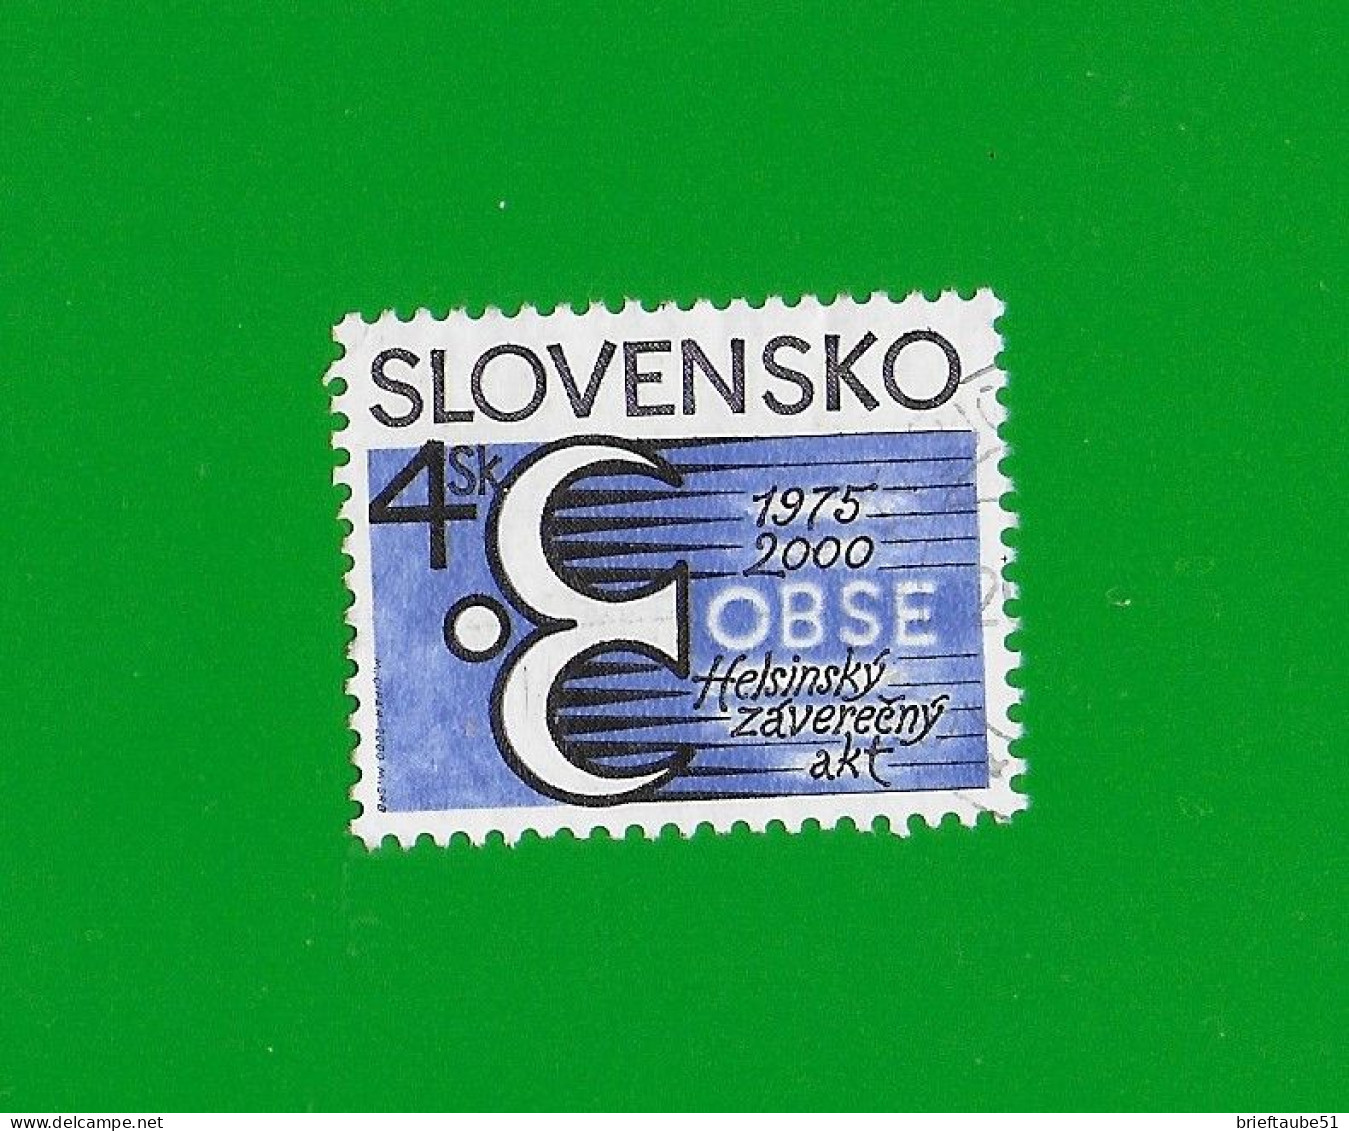 SLOVAKIA REPUBLIC 2000 Gestempelt°Used/Bedarf  MiNr. 374 #  "Helsinki Konferenz # KSZE" - Gebruikt